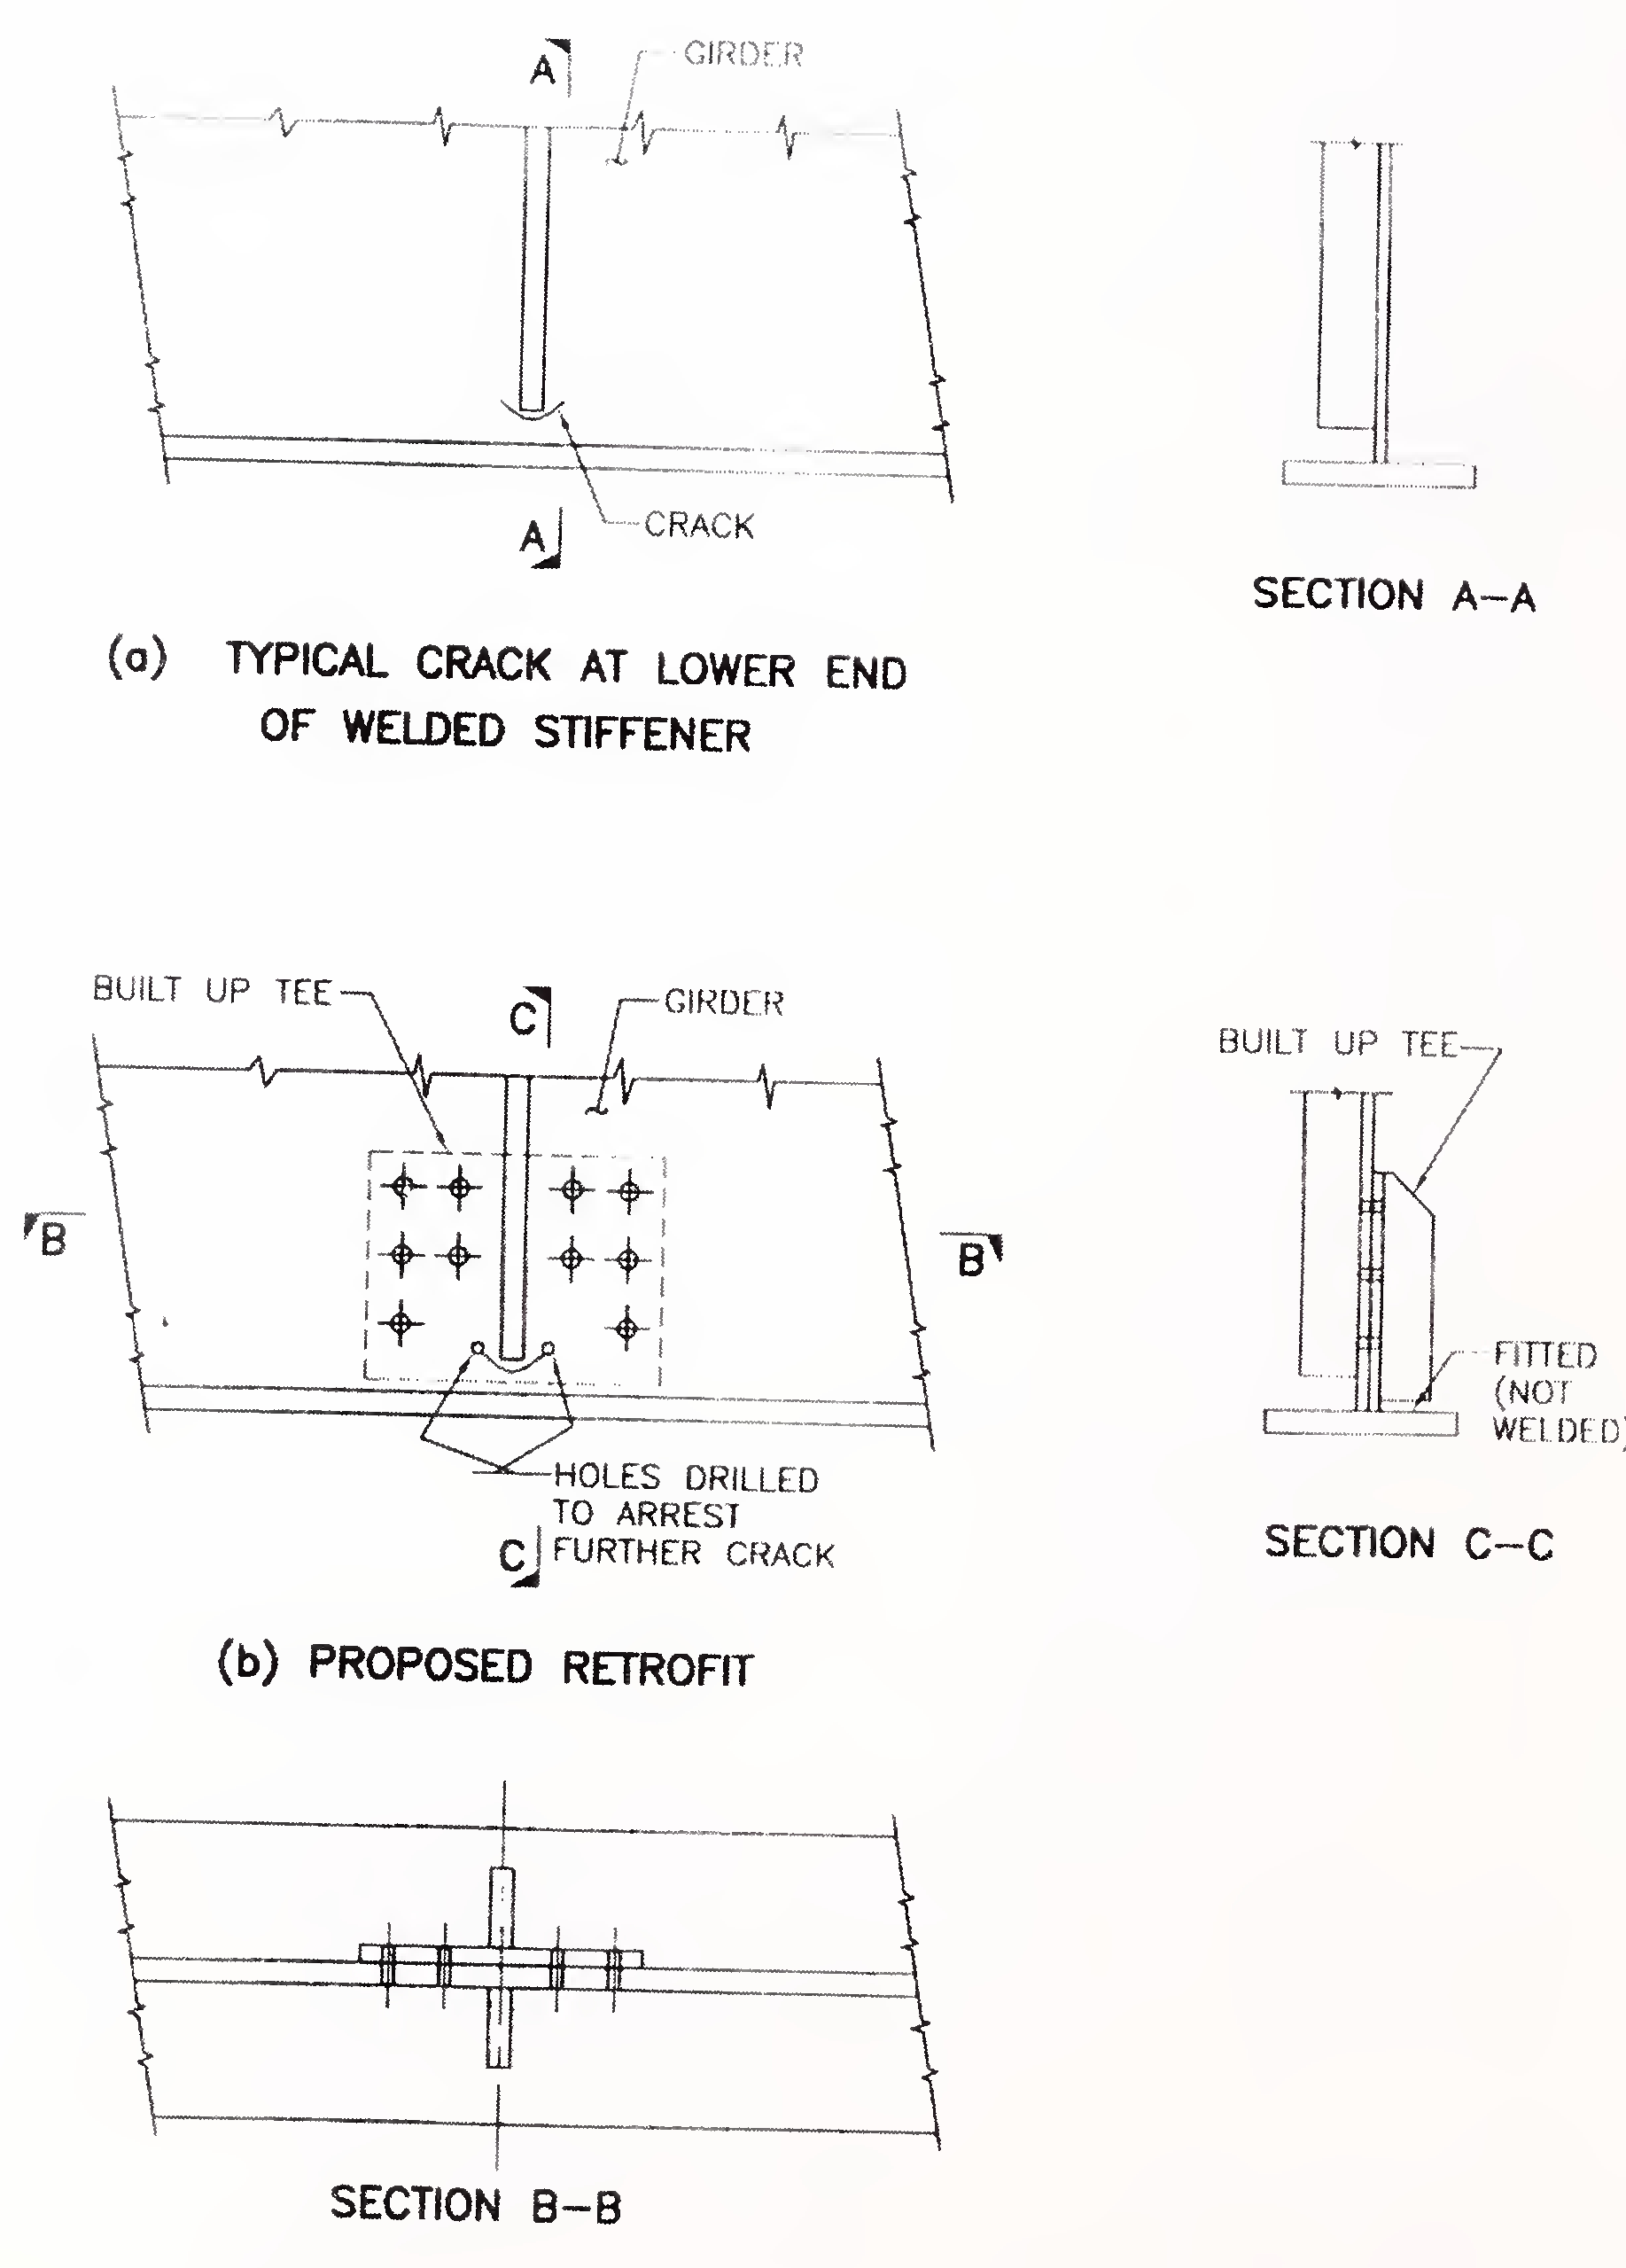 Fig. 7: Rehabilitation of crock in web of welded girder